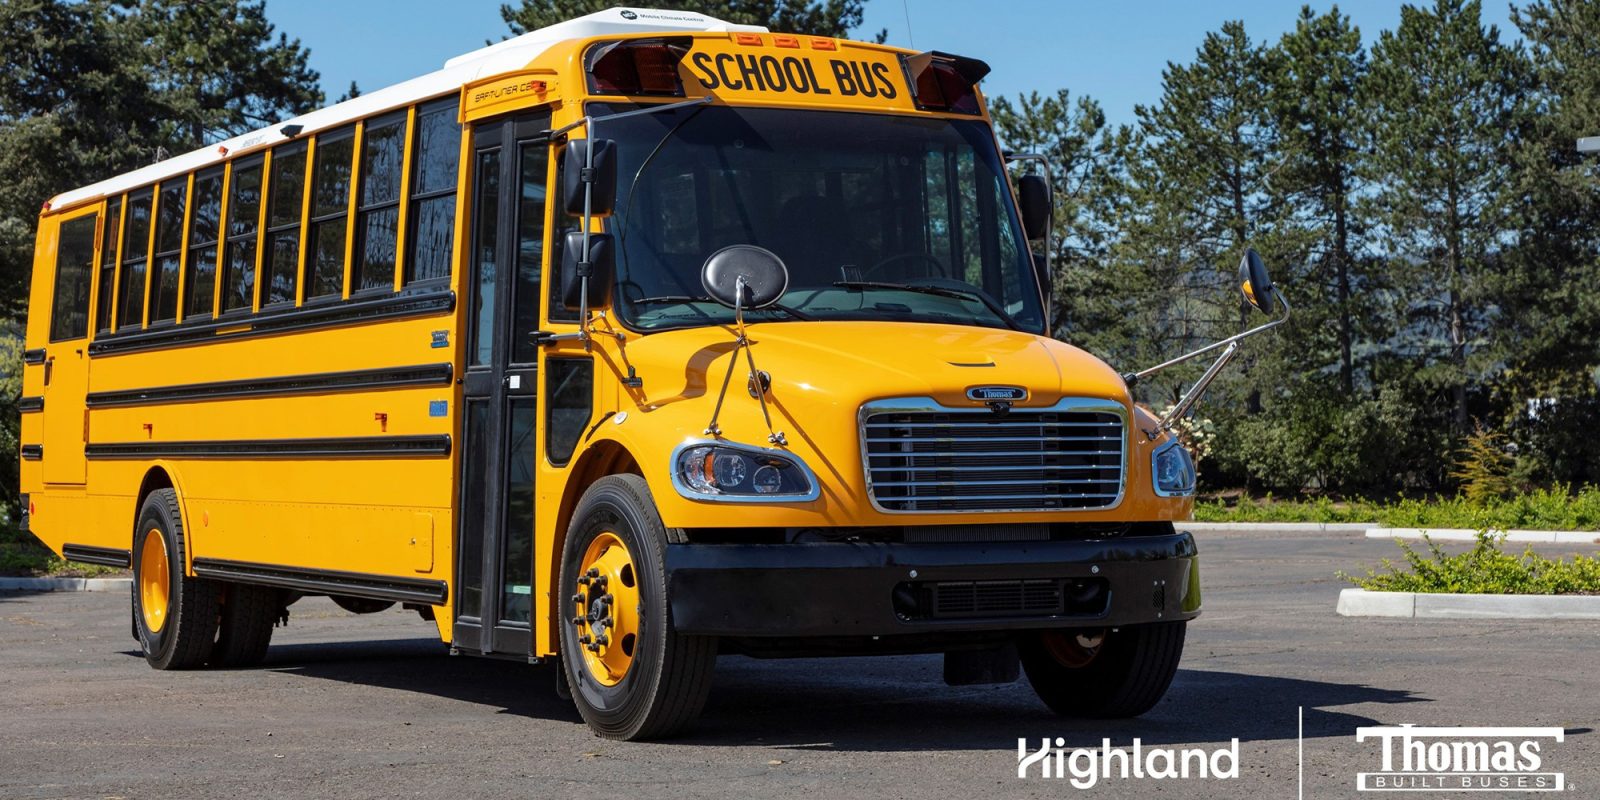 EPA electric school buses